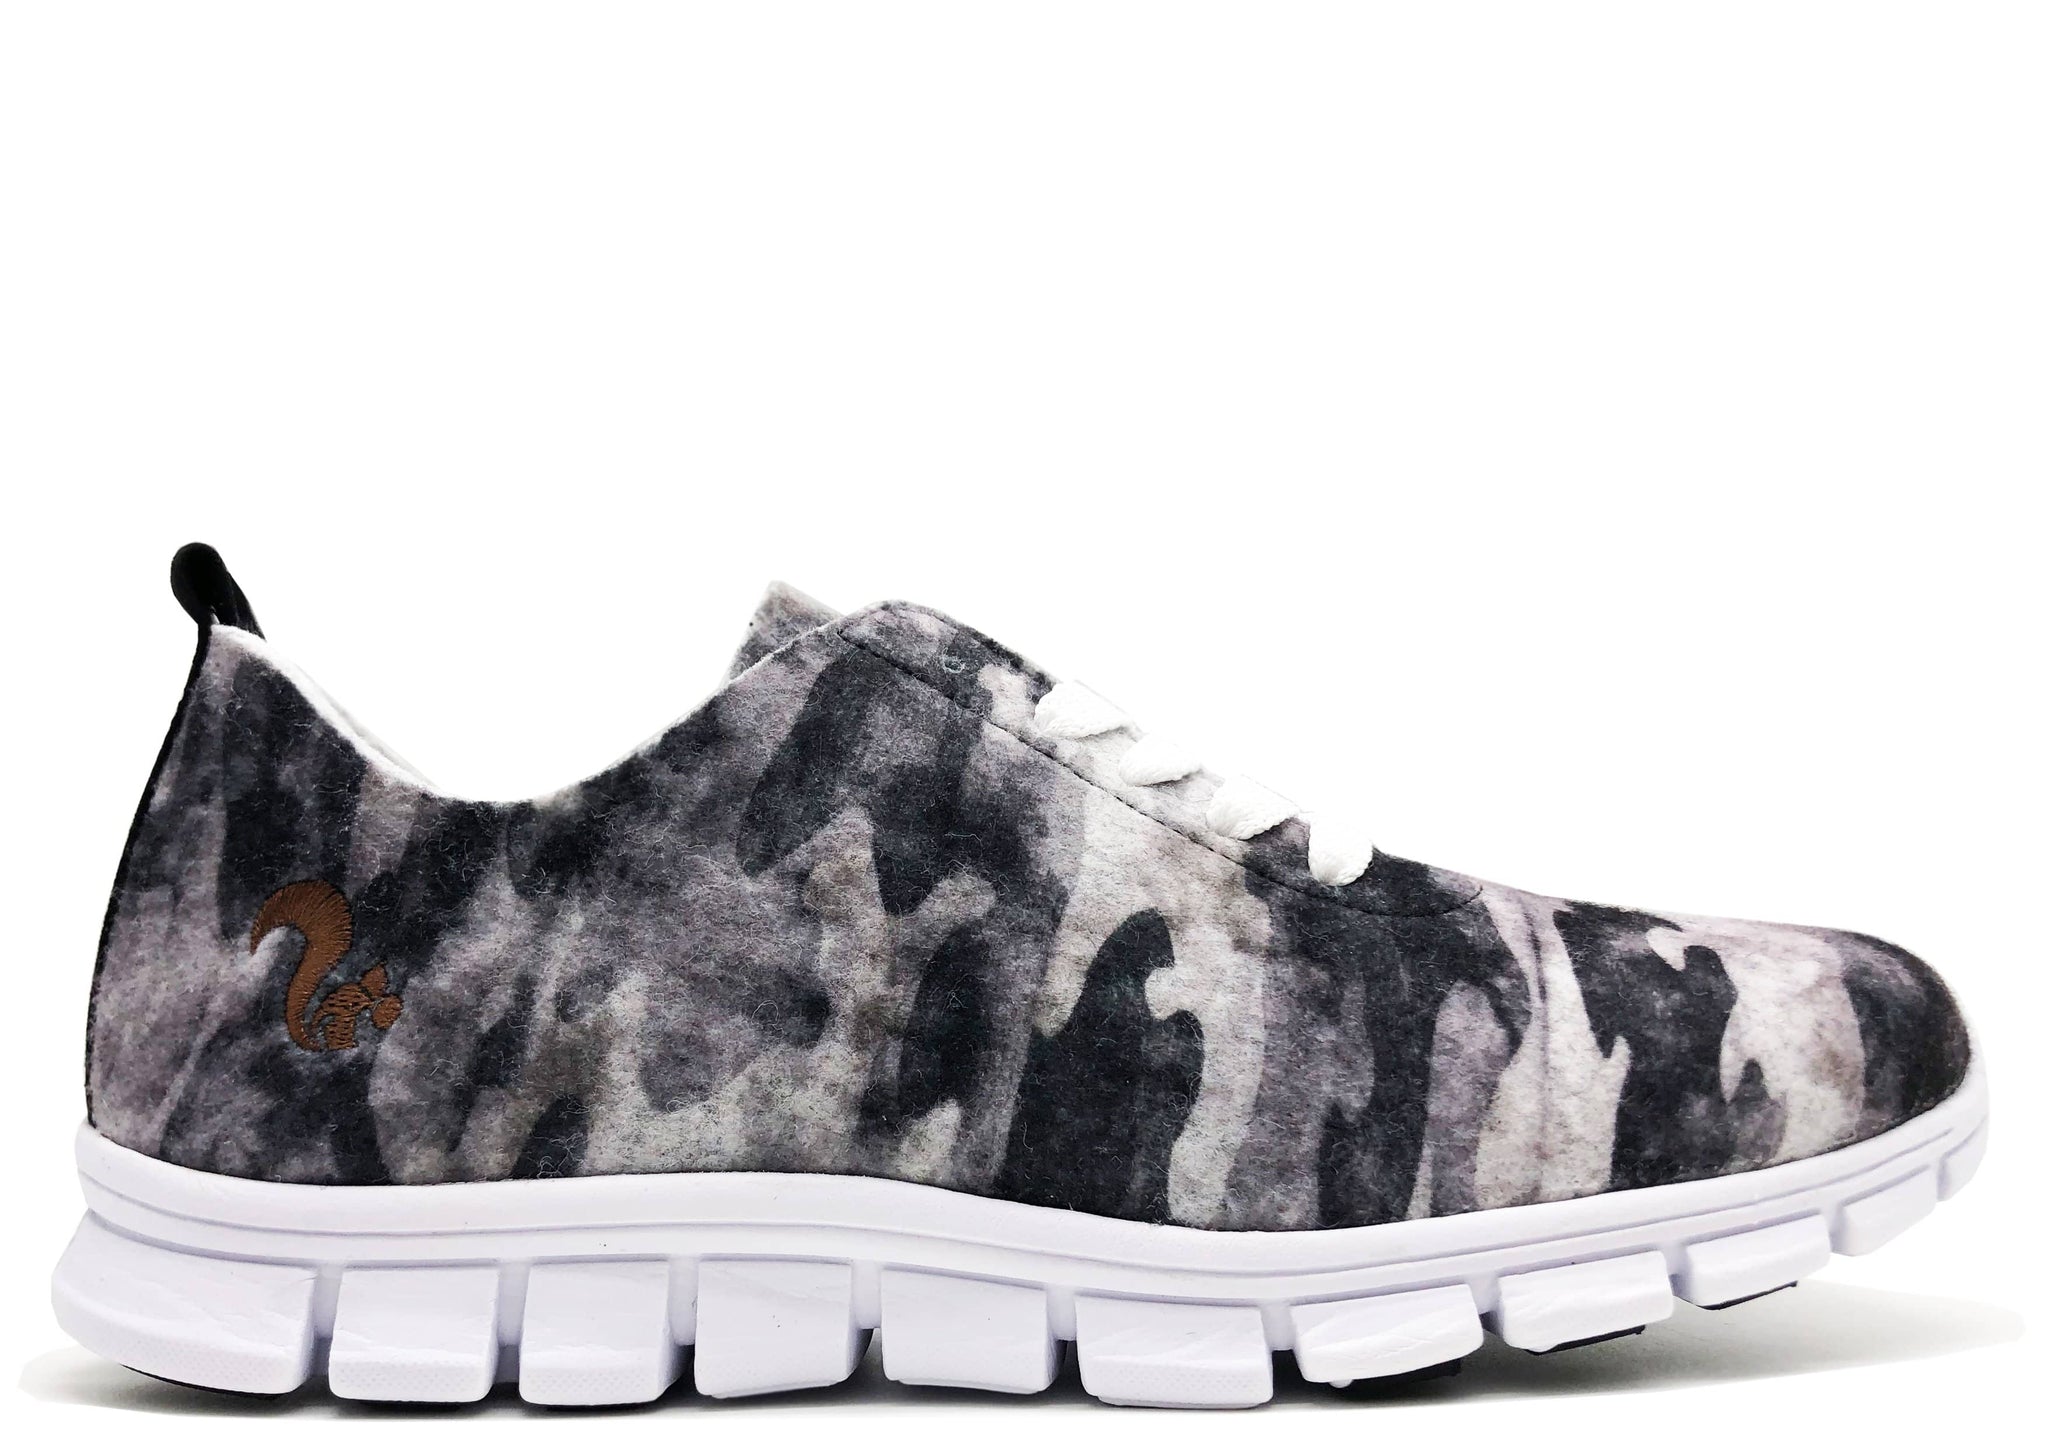 NAT 2 calçat thies ® PET Sneaker gris camuflatge | vegan aus recycelten Flaschen moda sostenible moda ètica